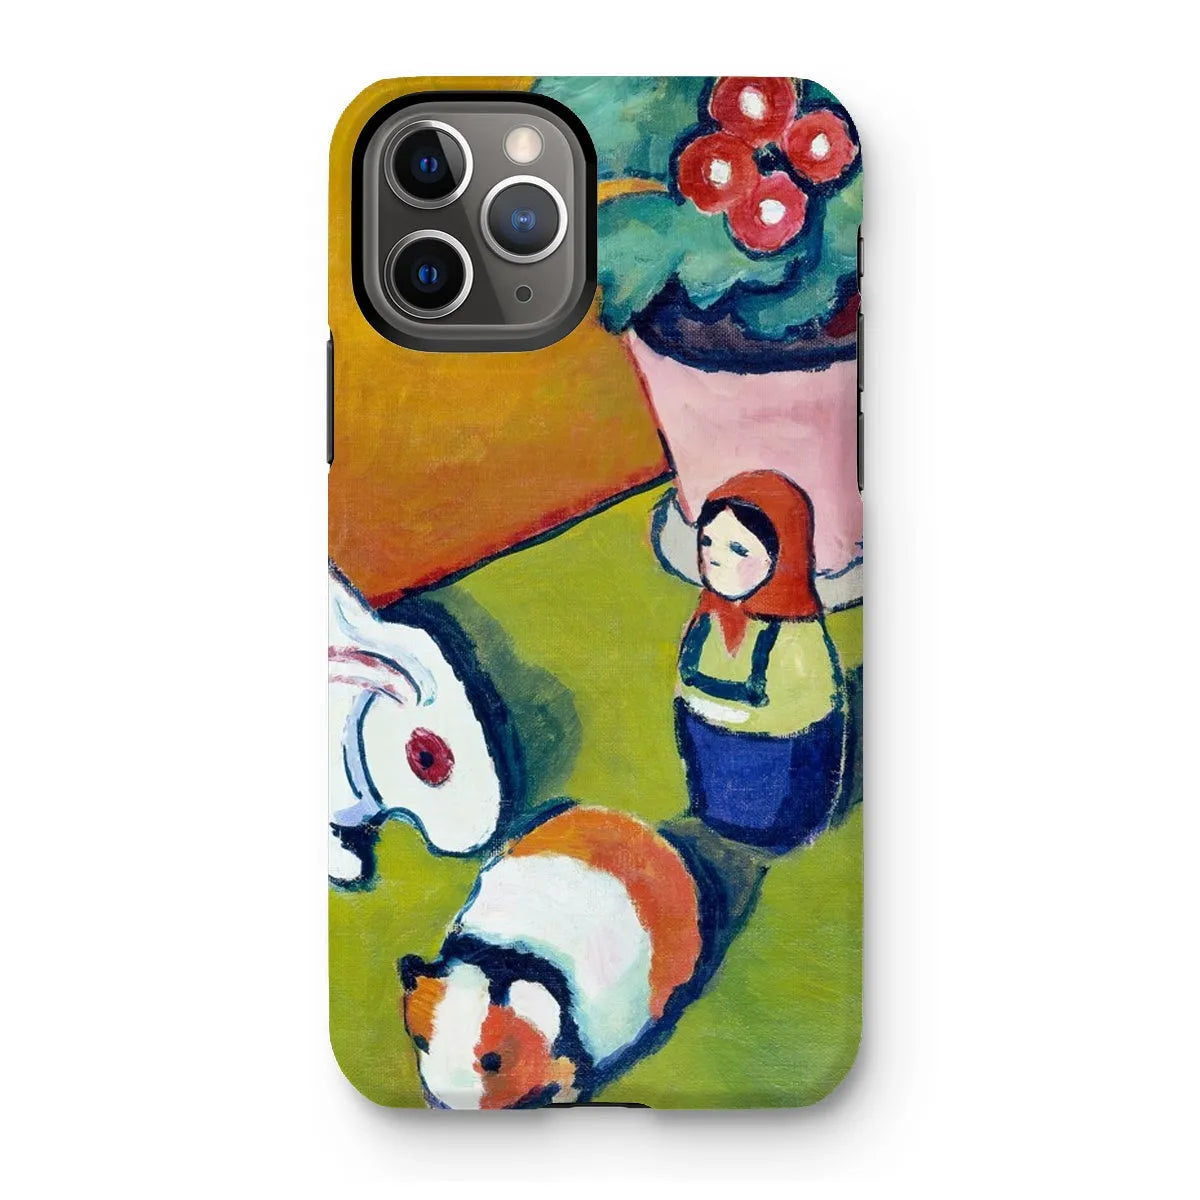 Little Walter’s Toys Art Phone Case - August Macke - Iphone 11 Pro / Matte - Mobile Phone Cases - Aesthetic Art